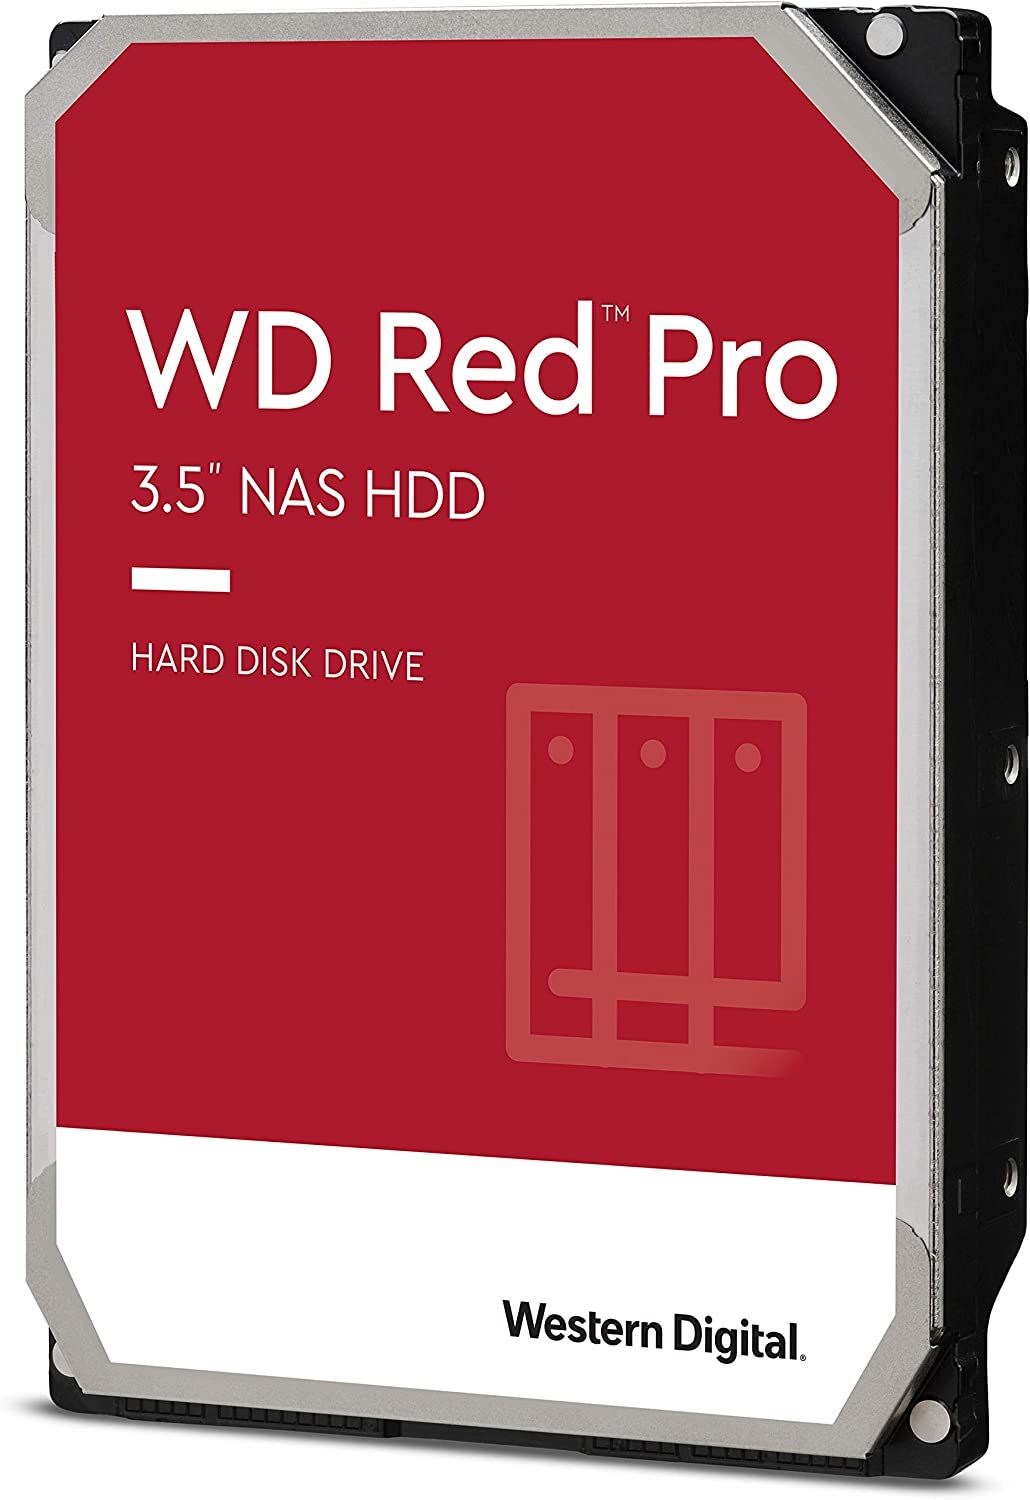 Western Digital WD Red Pro 3.5